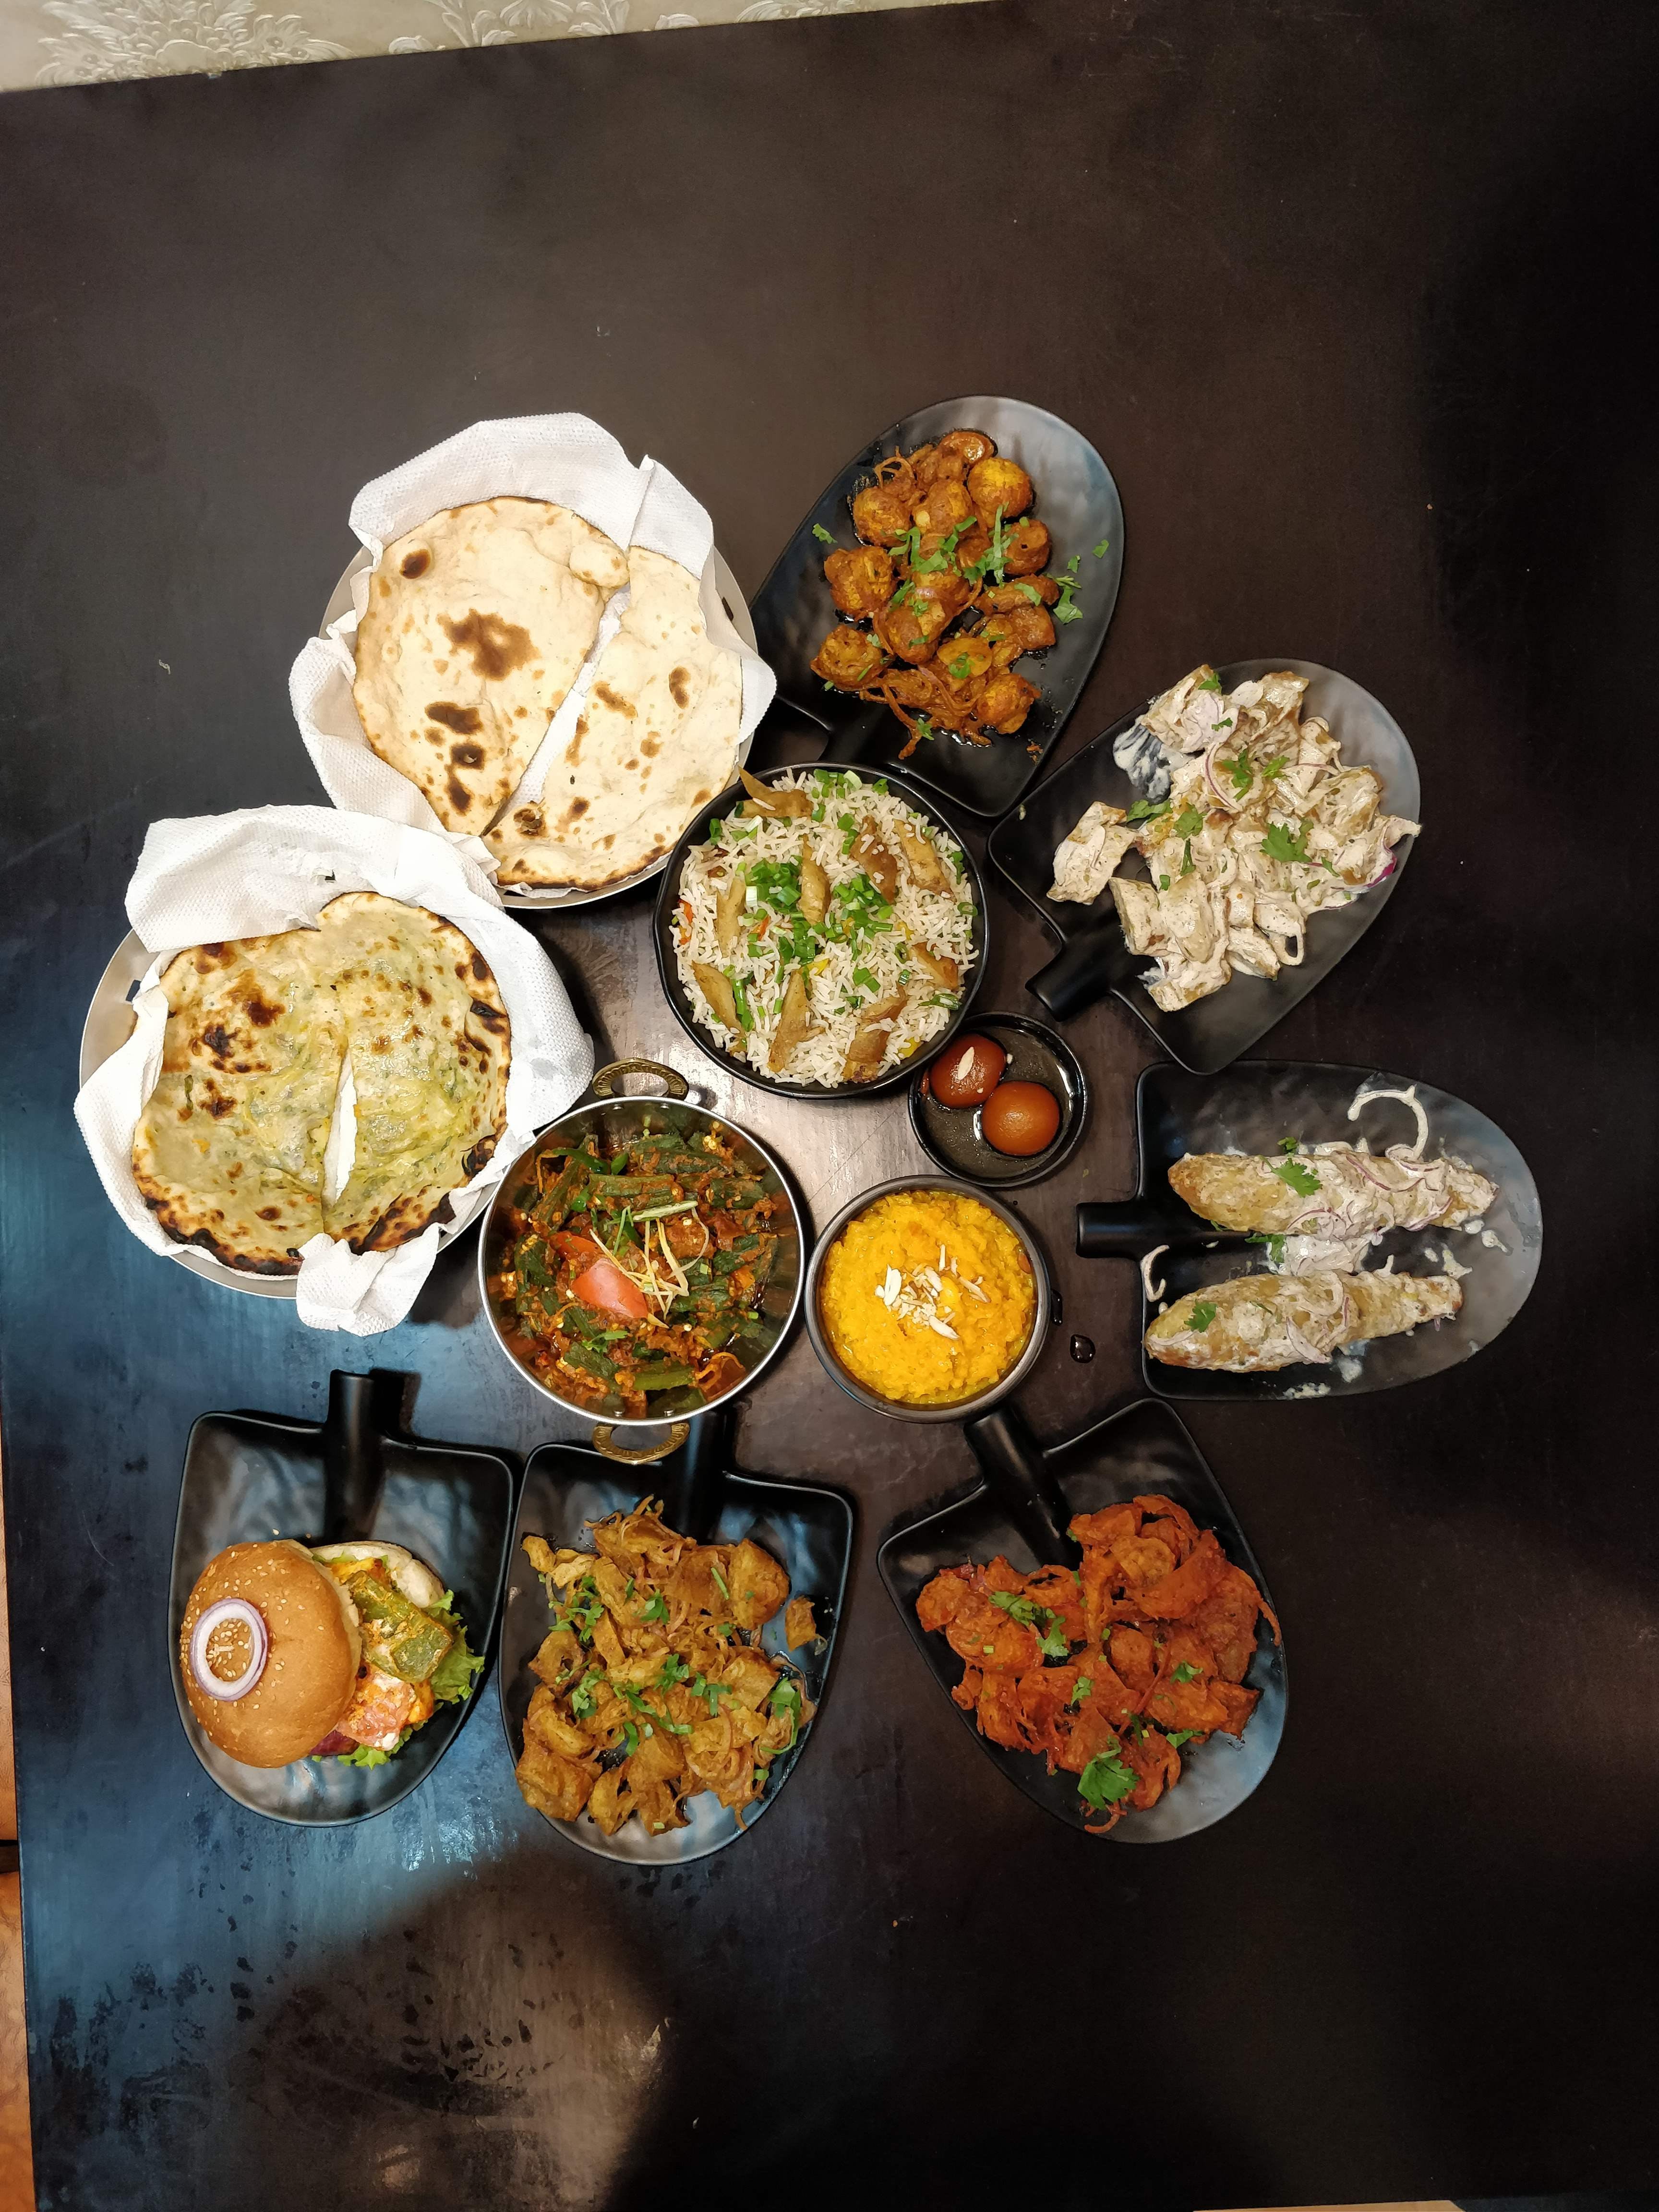 Cuisine,Dish,Food,Meal,Ingredient,Vegetarian food,Recipe,Comfort food,Garnish,Indian cuisine